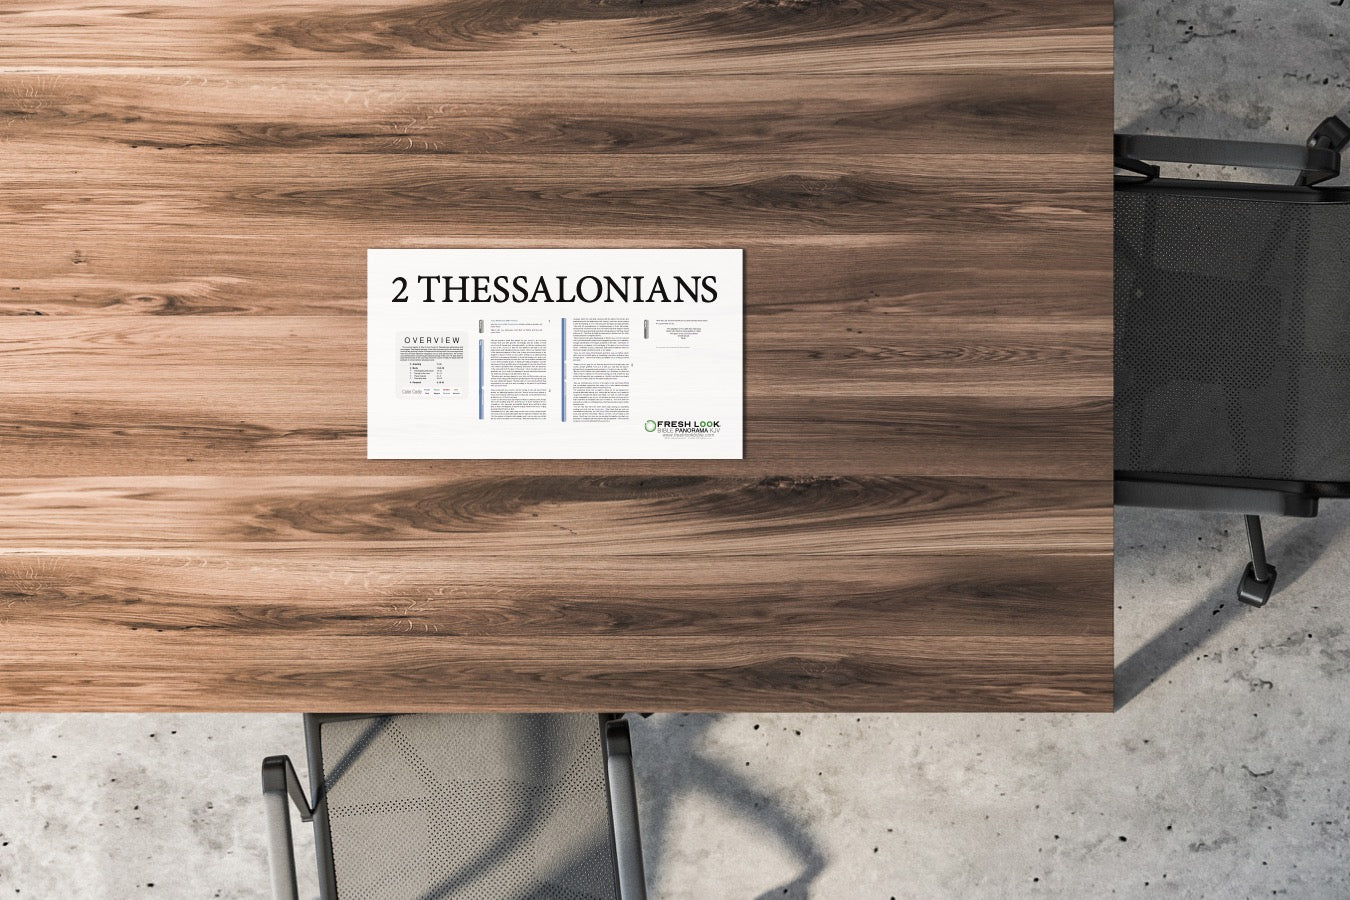 2 Thessalonians Panorama Not Laminated